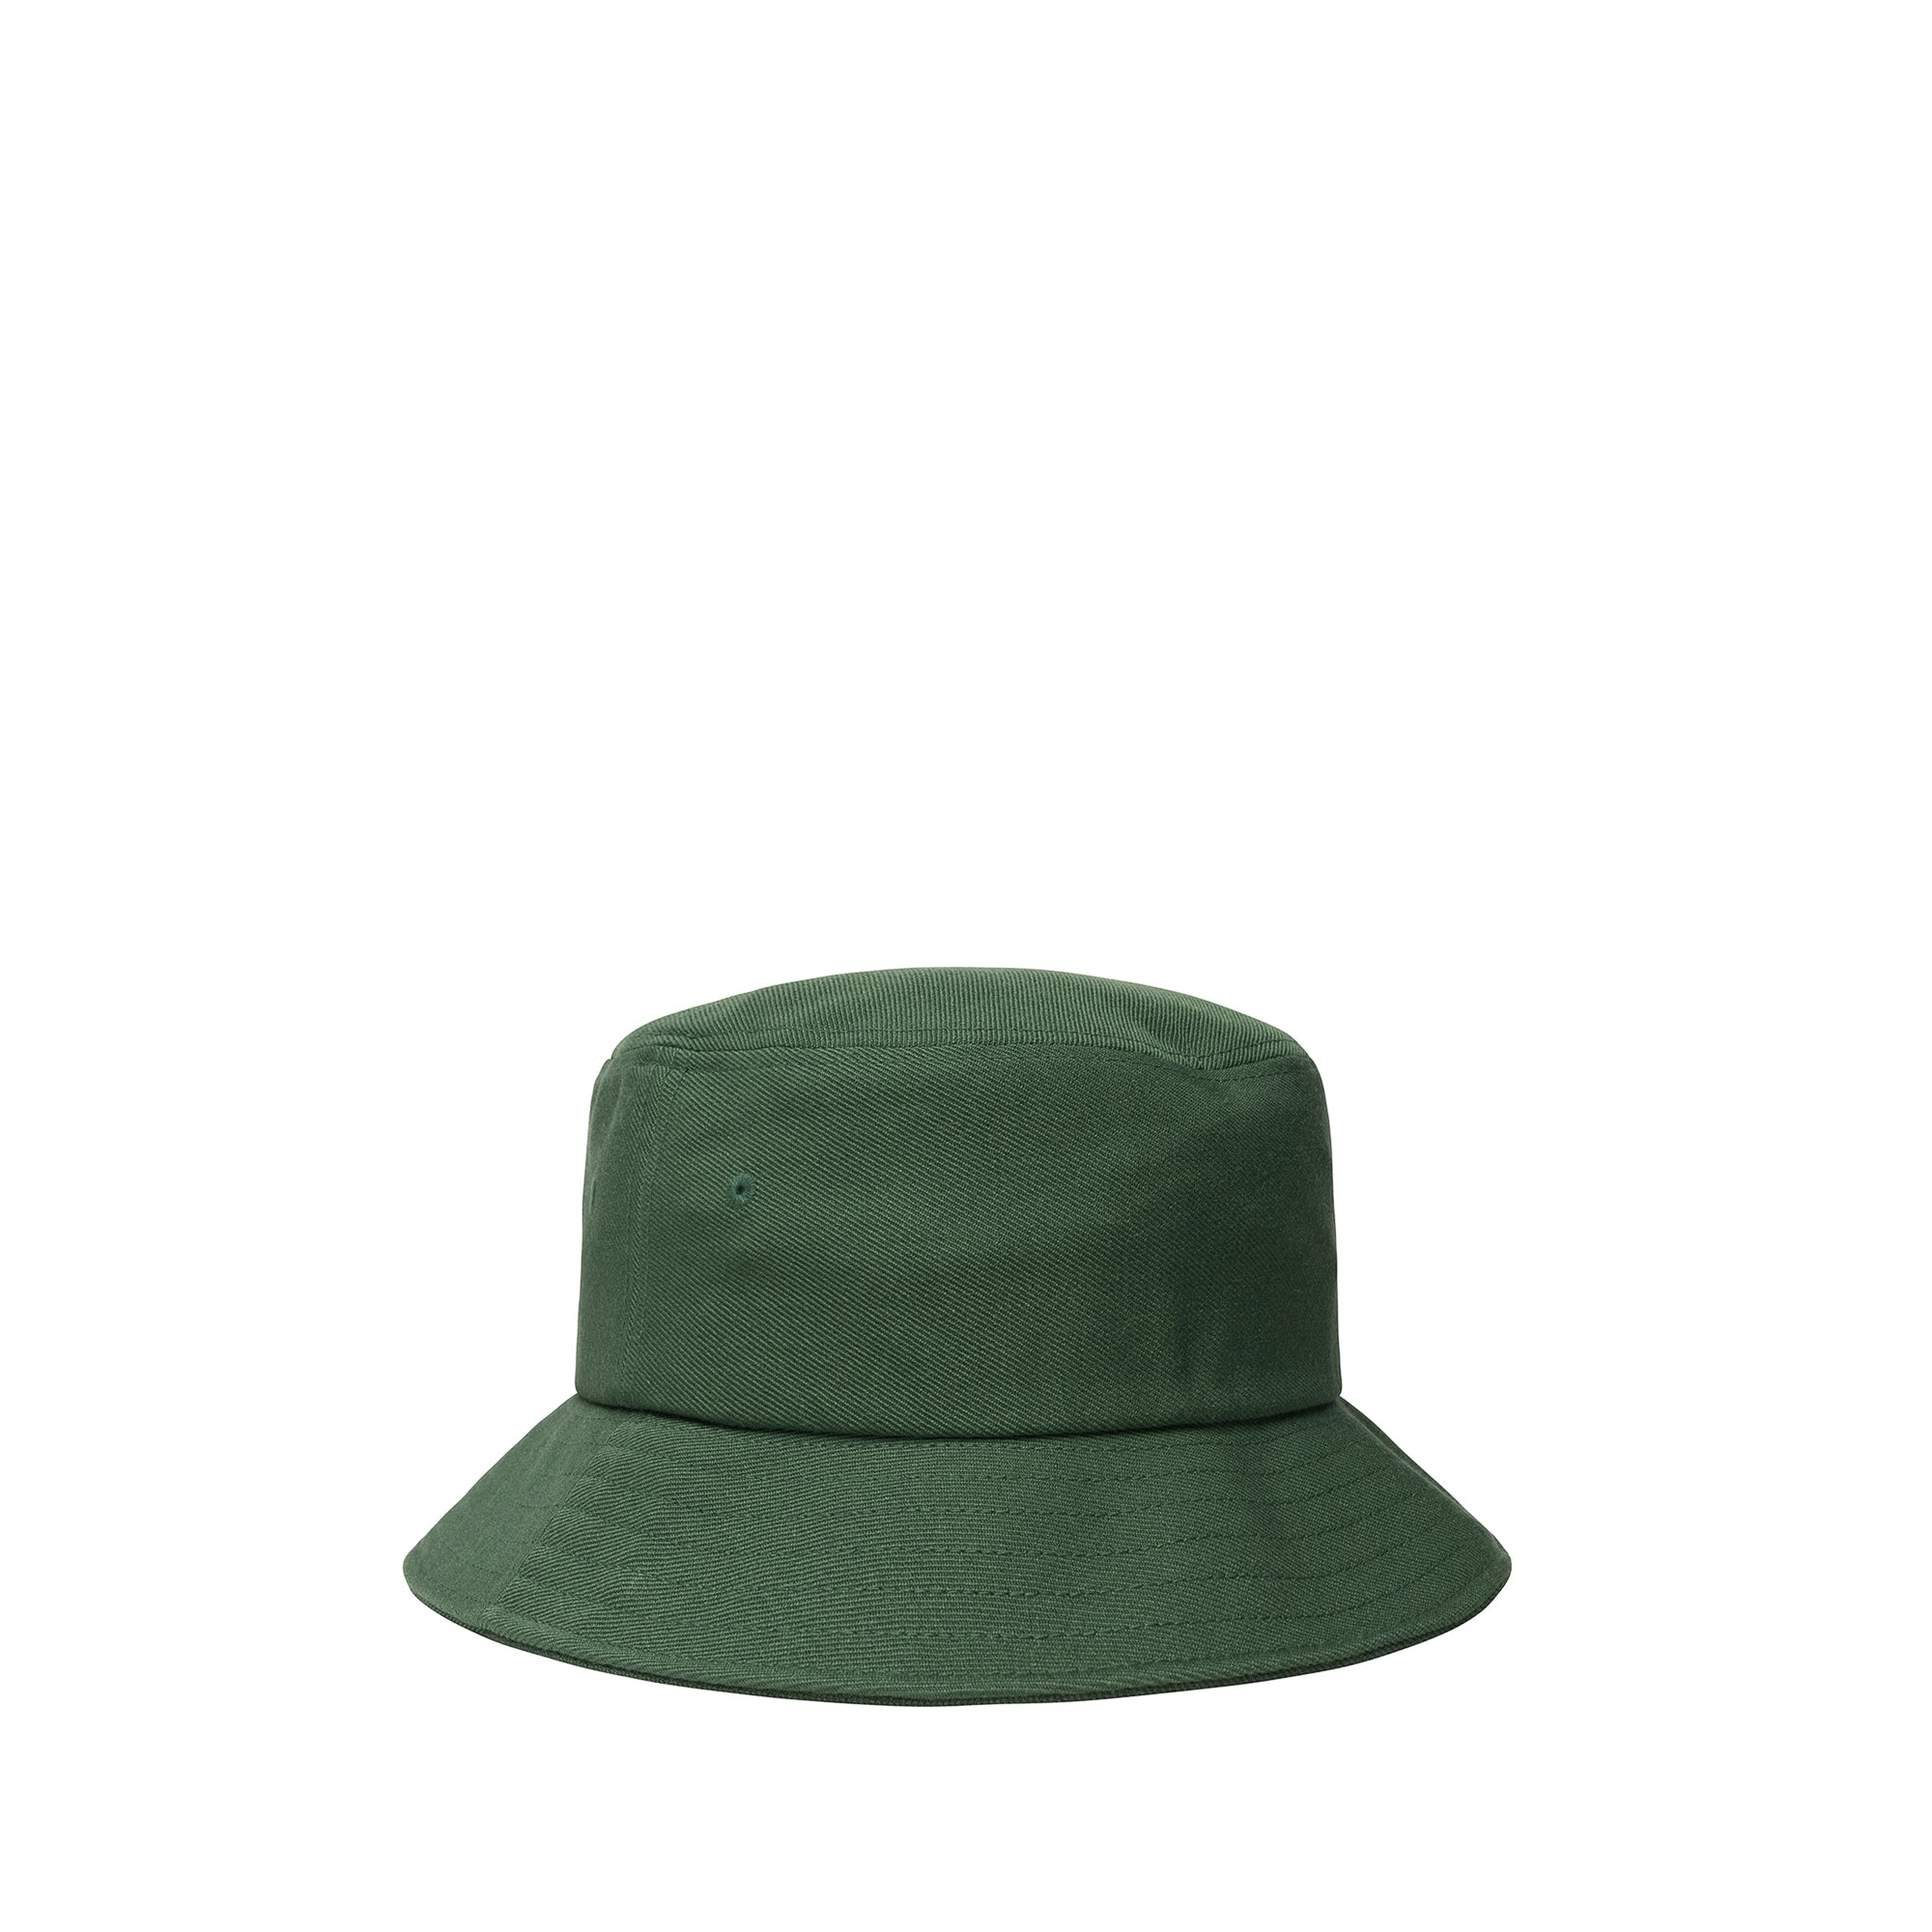 Stüssy - Big Stock Bucket Hat - (Forest)